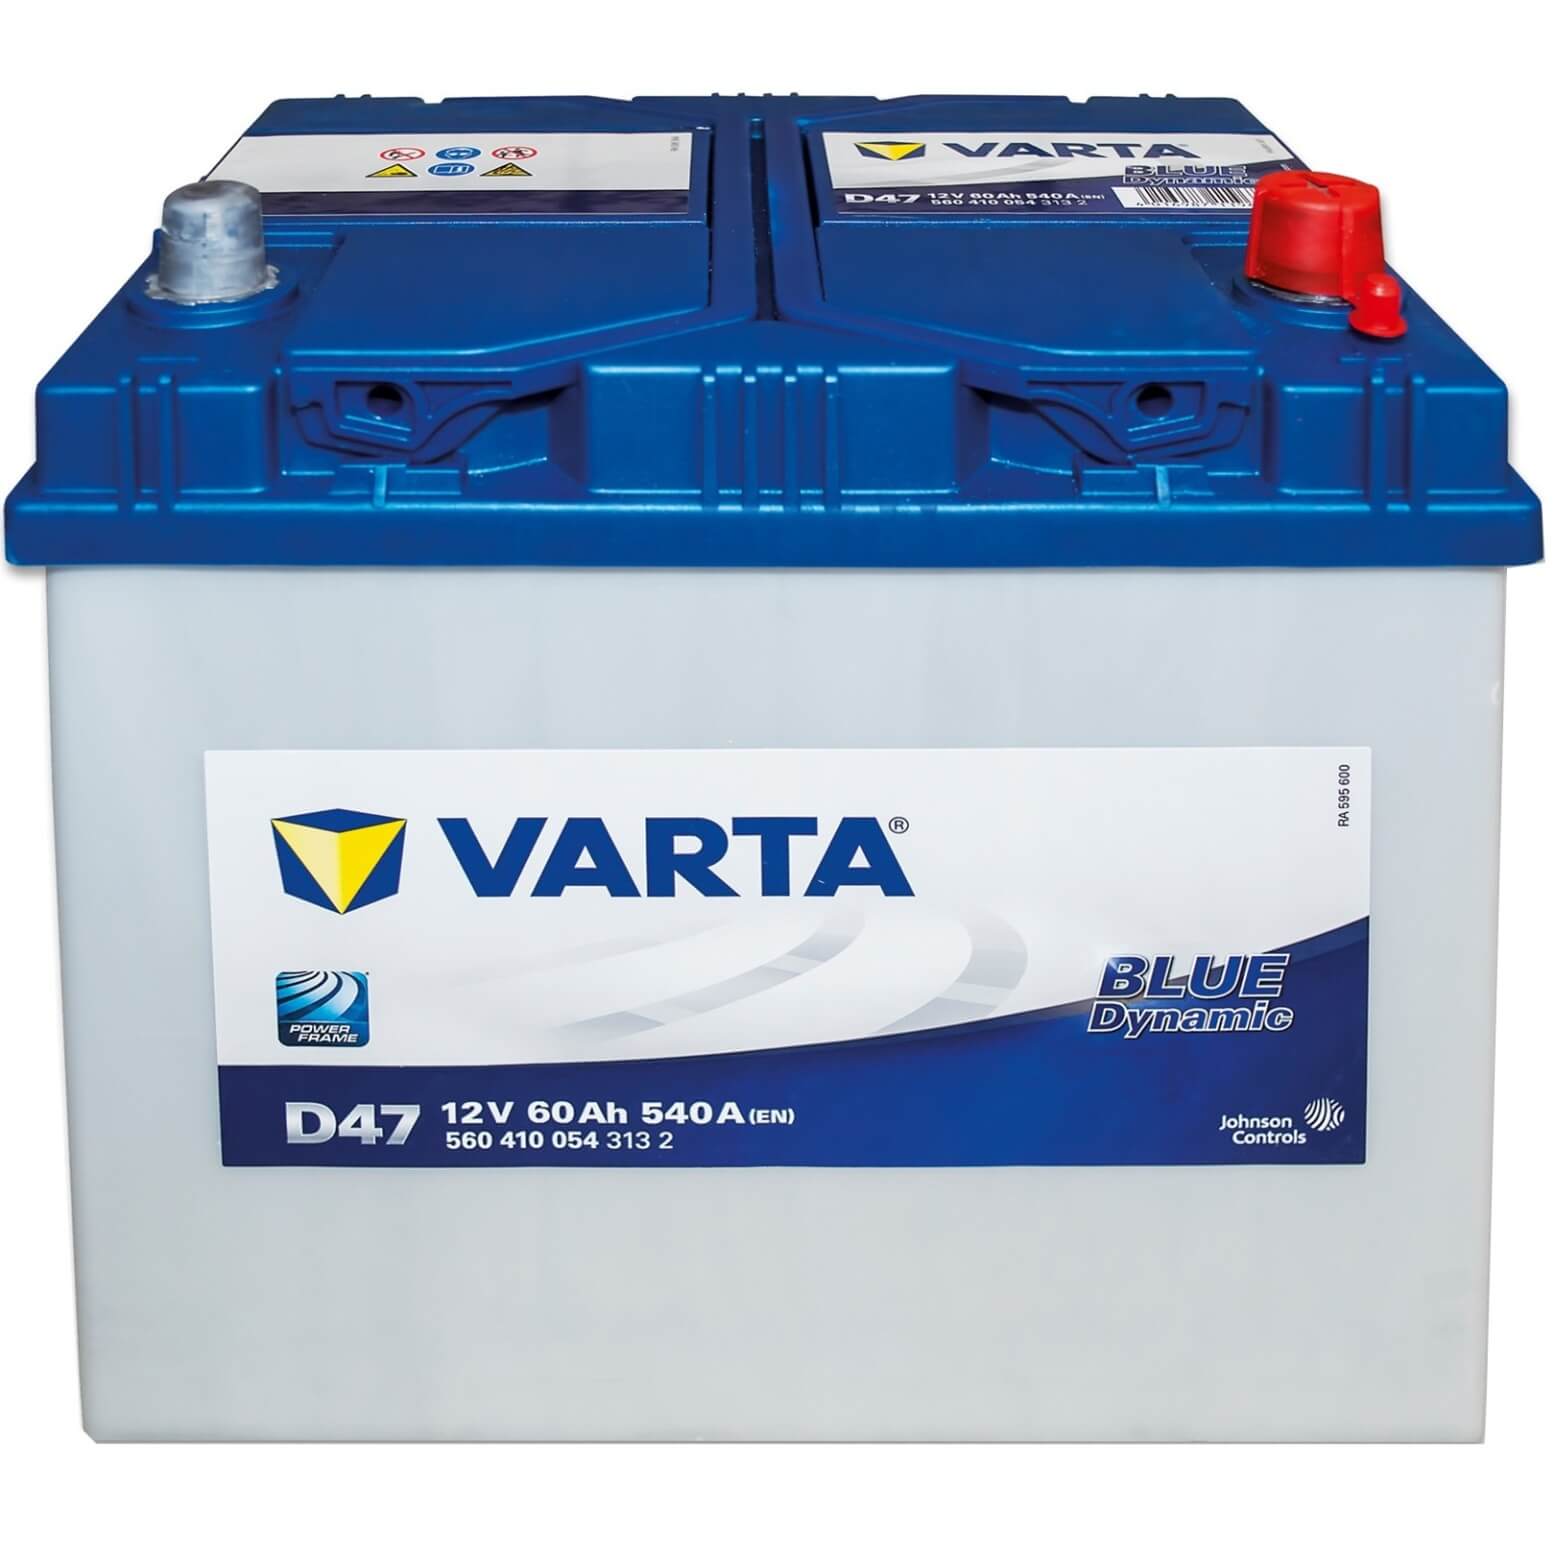 078 Varta D43 Blue Dynamic Car Battery 12V 60Ah 540CCA